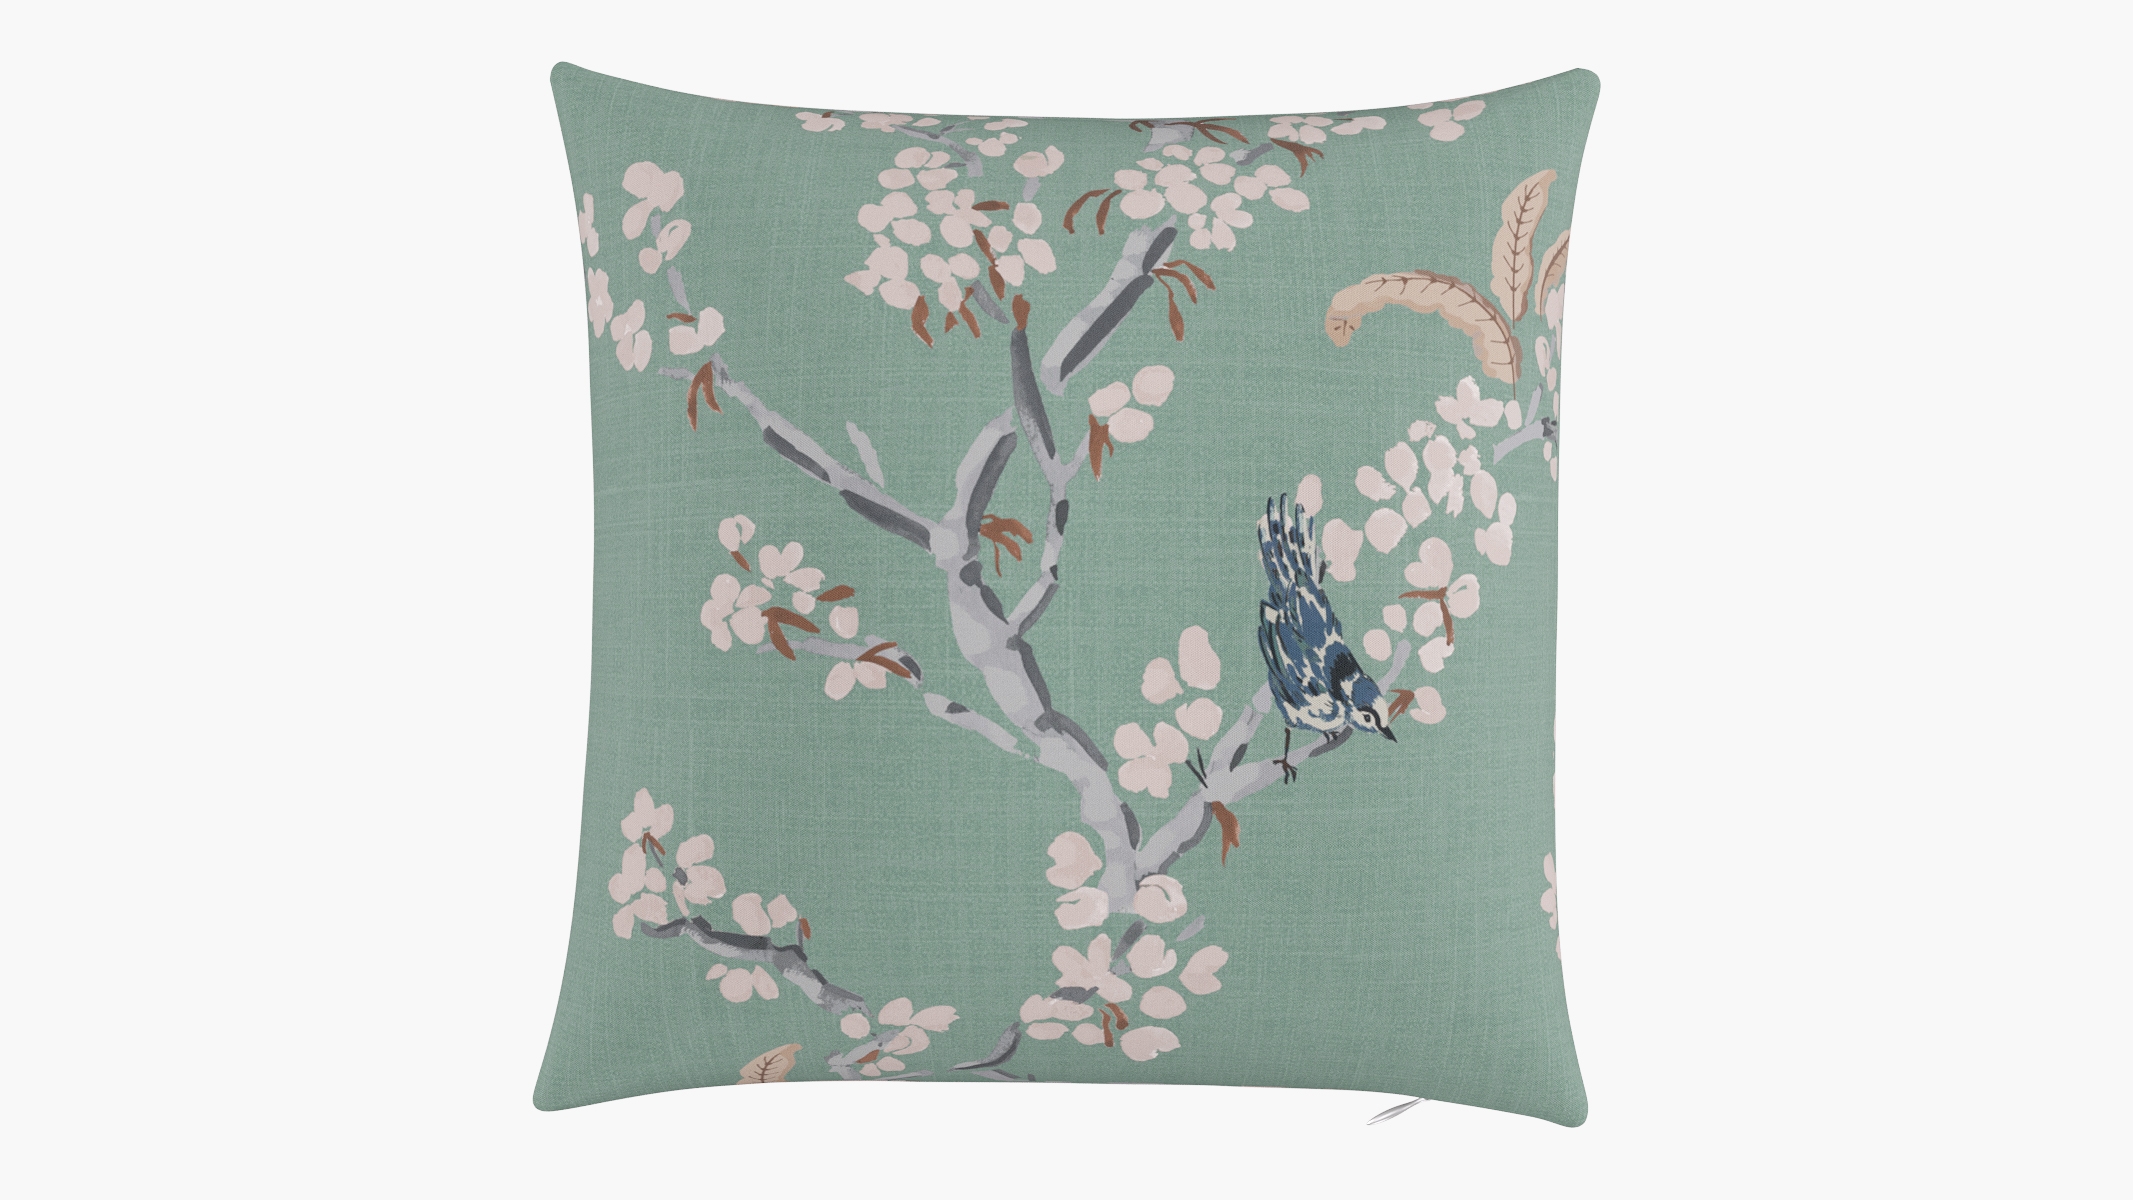 Throw Pillow 18", Mint Cherry Blossom, 18" x 18" - Image 0